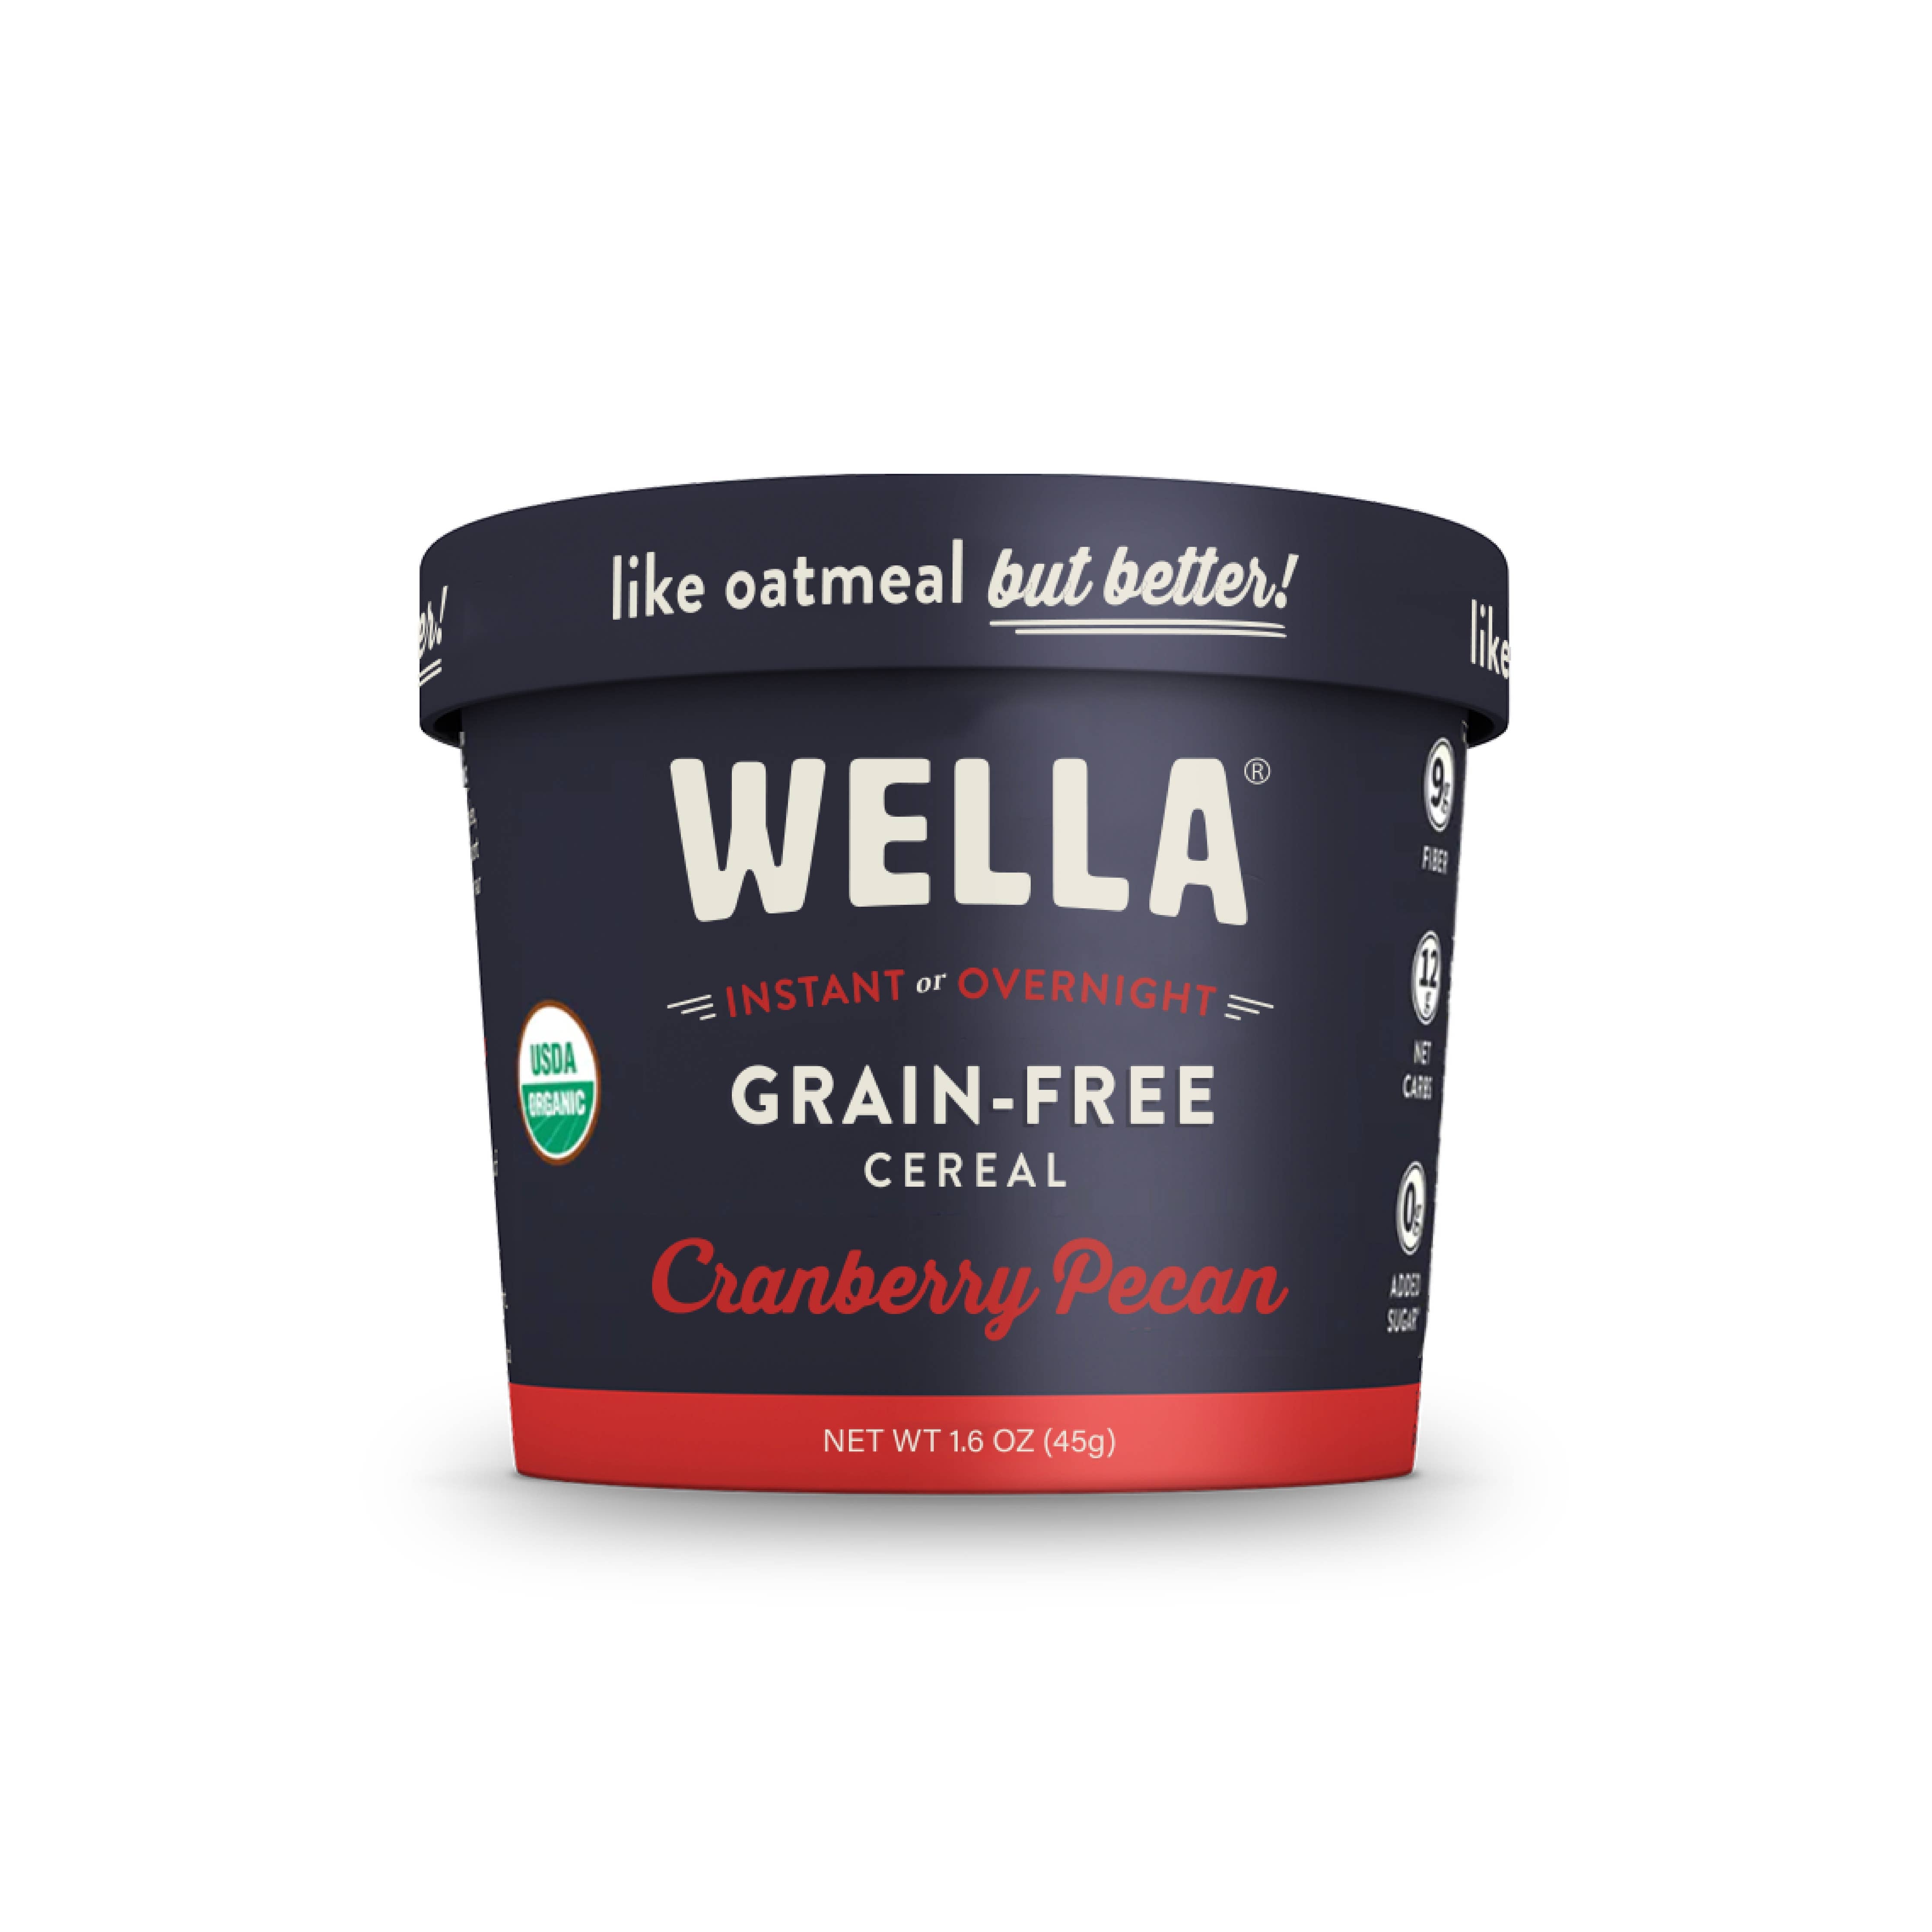 Wella Grain-Free Cereal Cranberry Pecan Cup